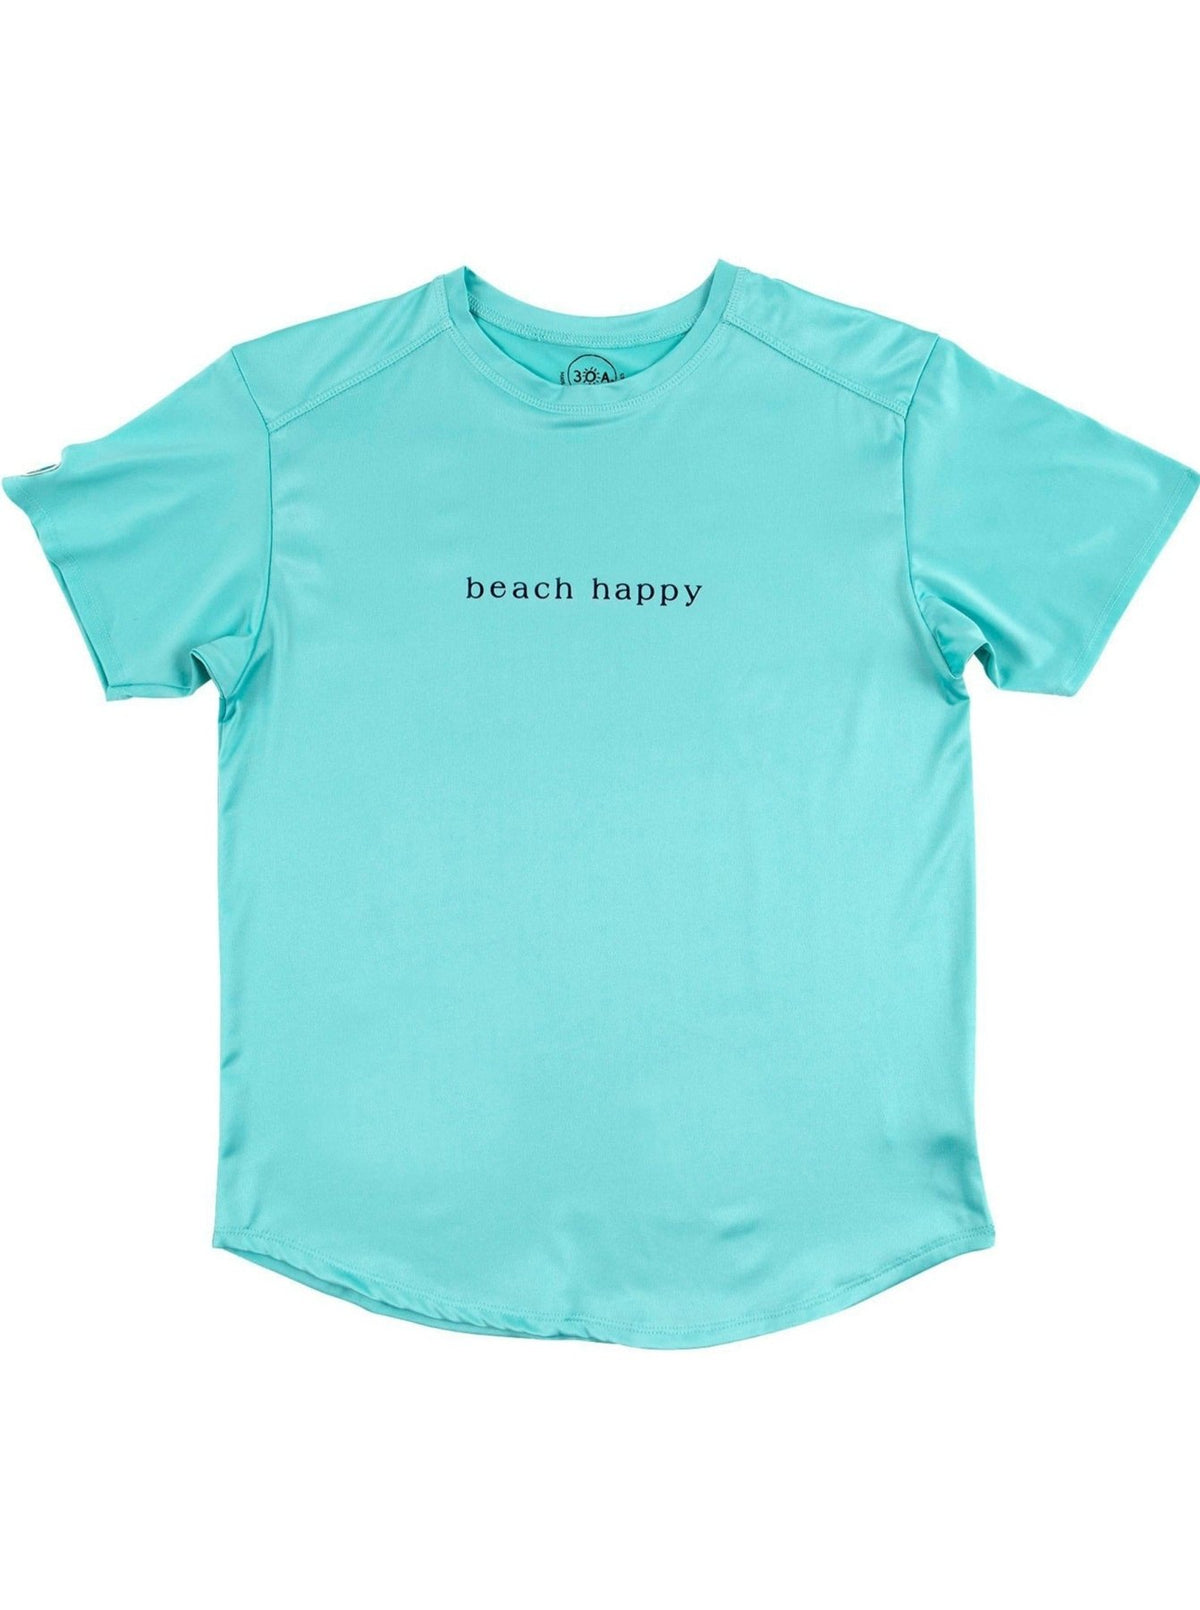 Simple Beach Happy Sun T - Shirt - 30A Gear - men tee